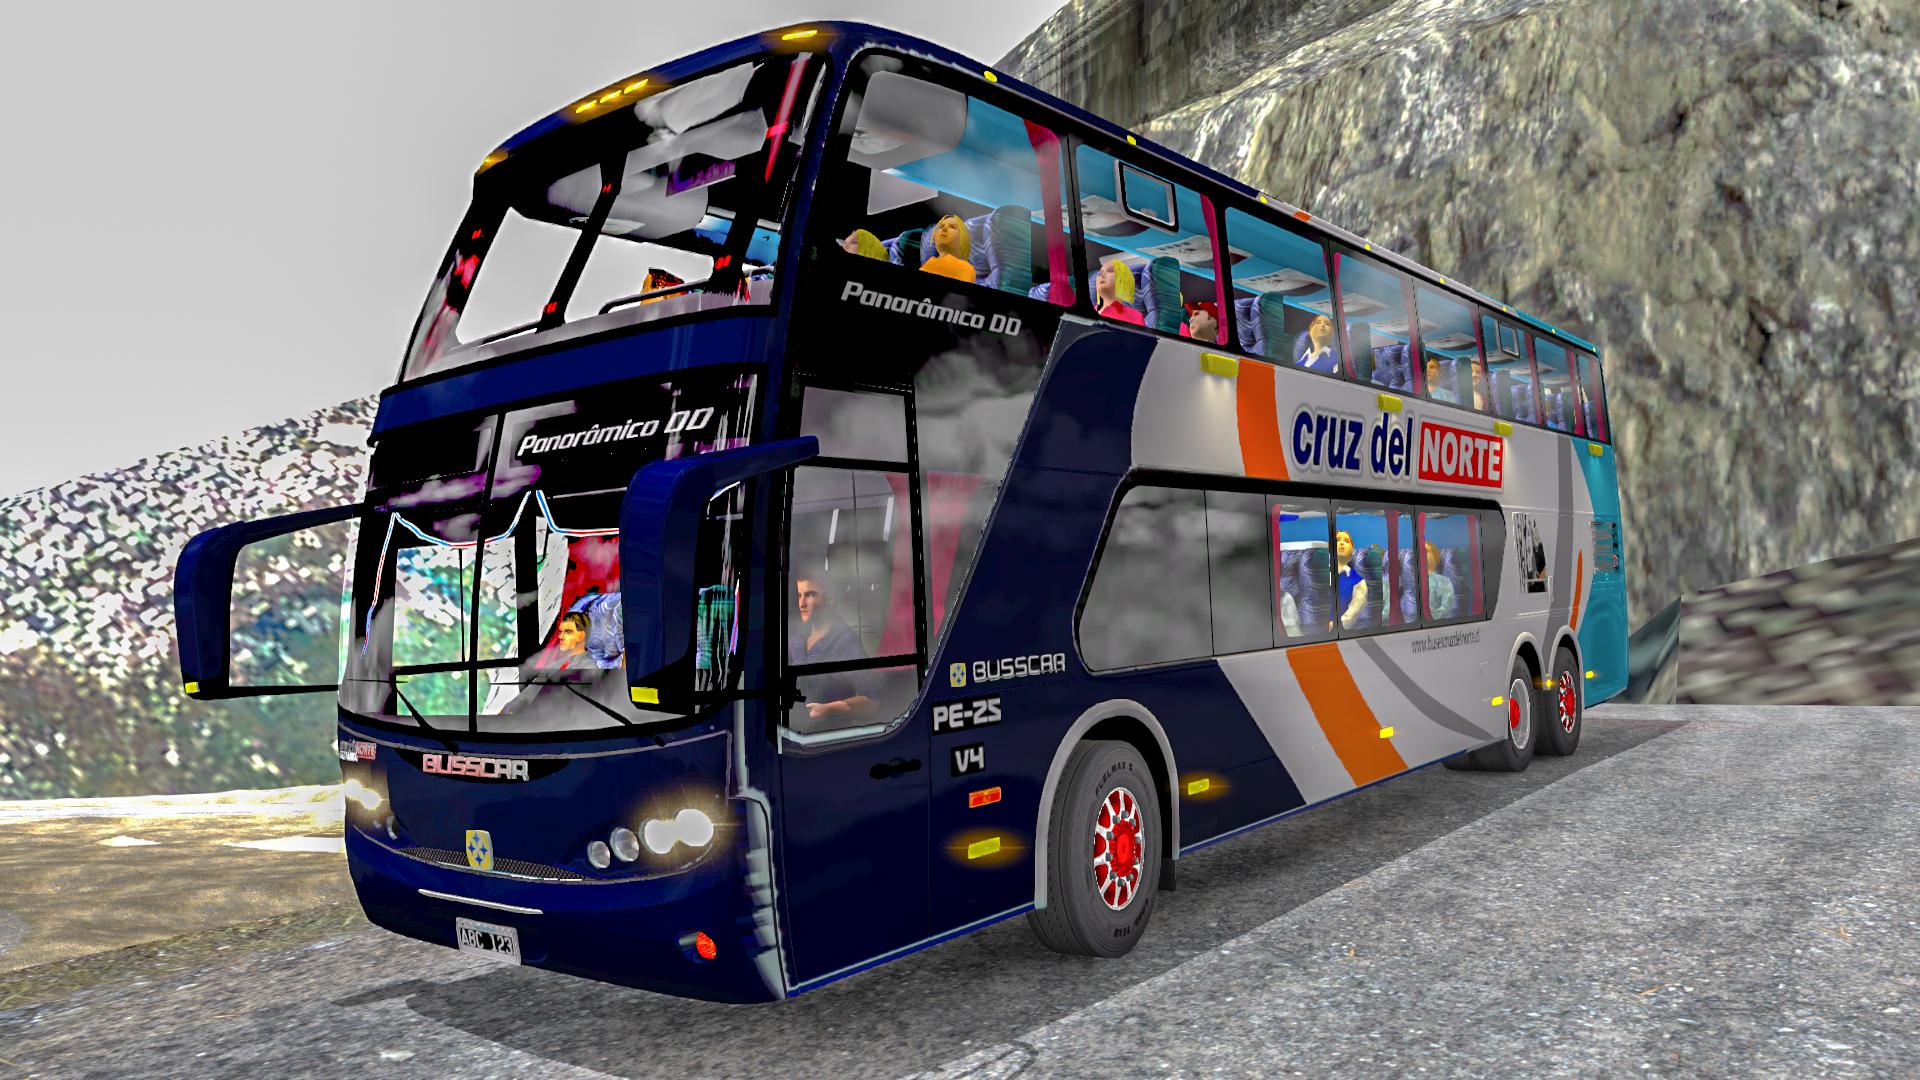 Busscar Scania Panoramico DD 6x2 v4 Bus Mod  1 38 Allmods net